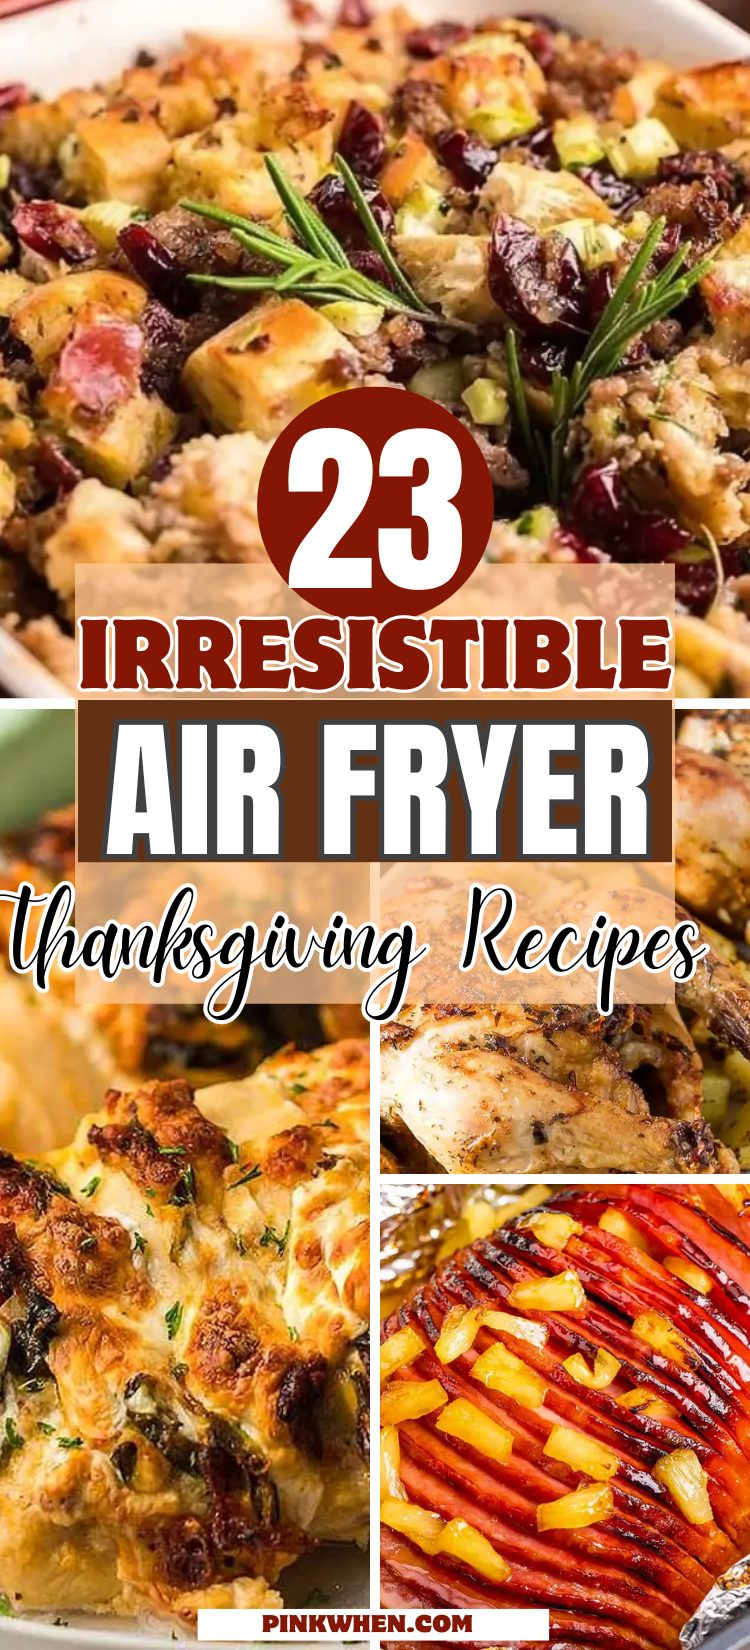 23 Irresistible Air Fryer Thanksgiving Recipes